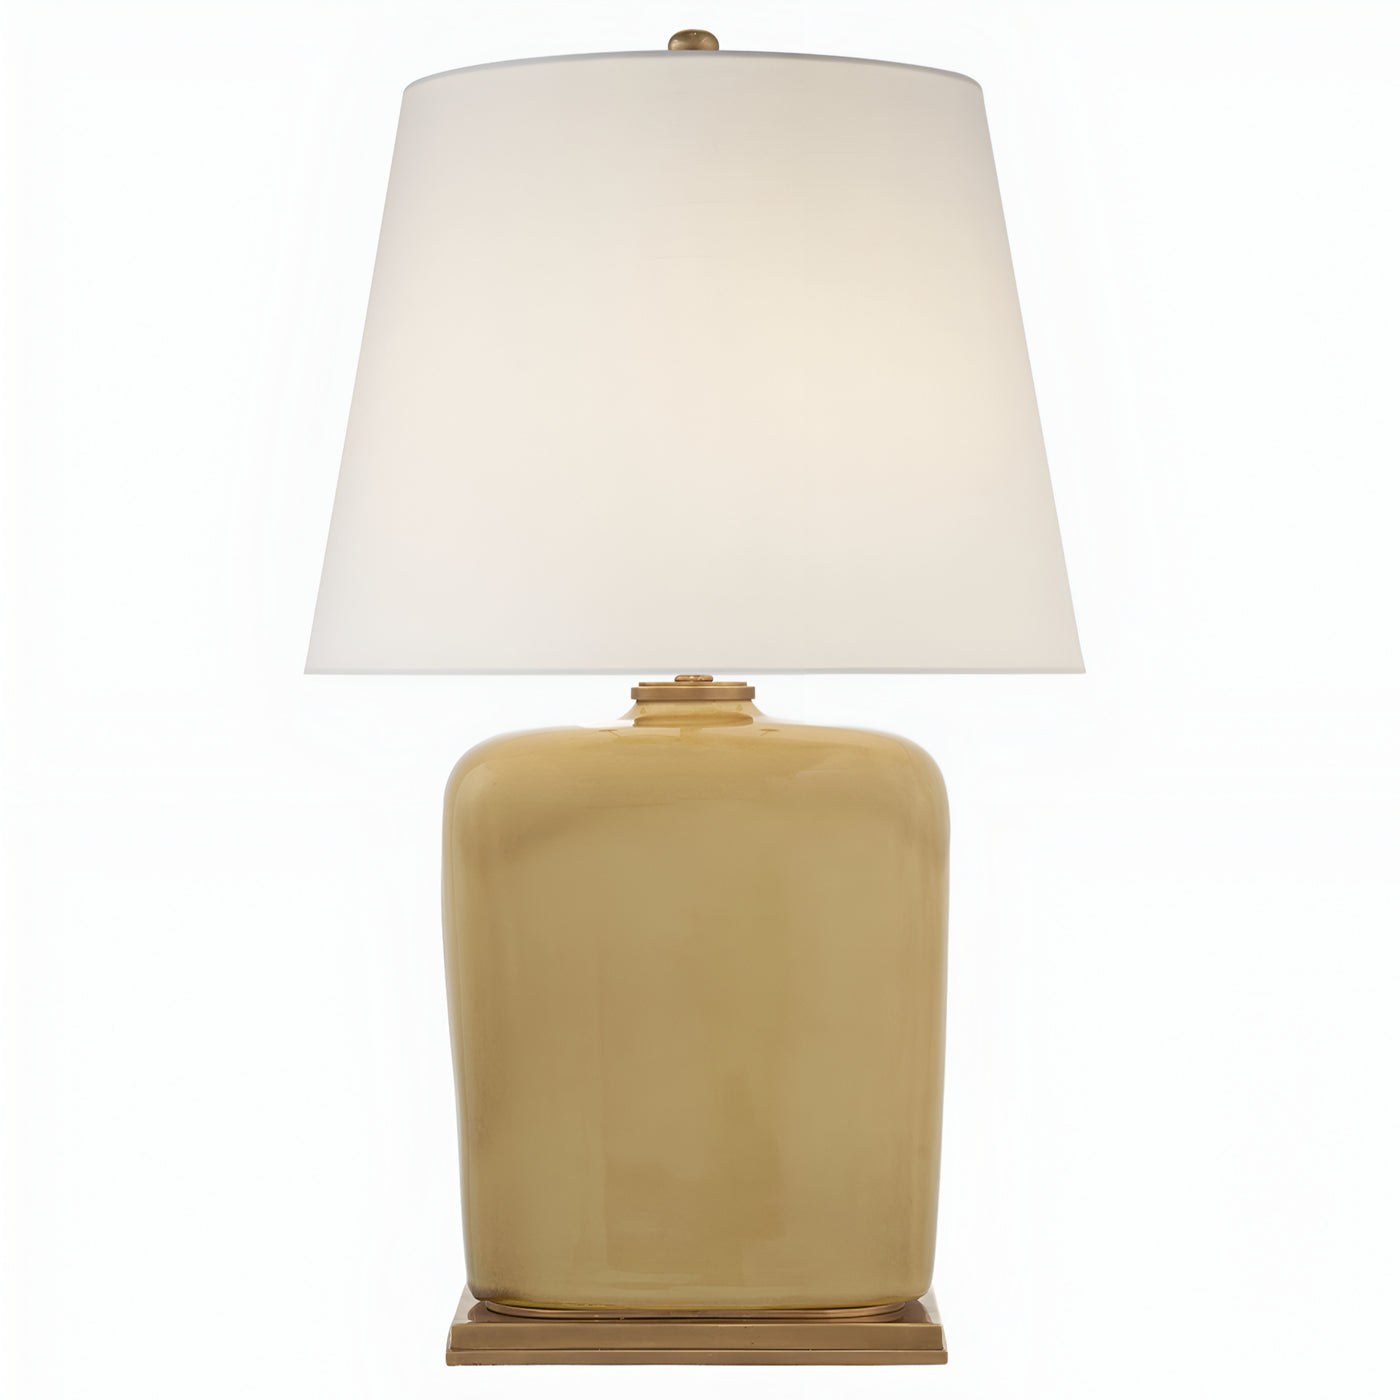 Mimi Table Lamp in Light Honey